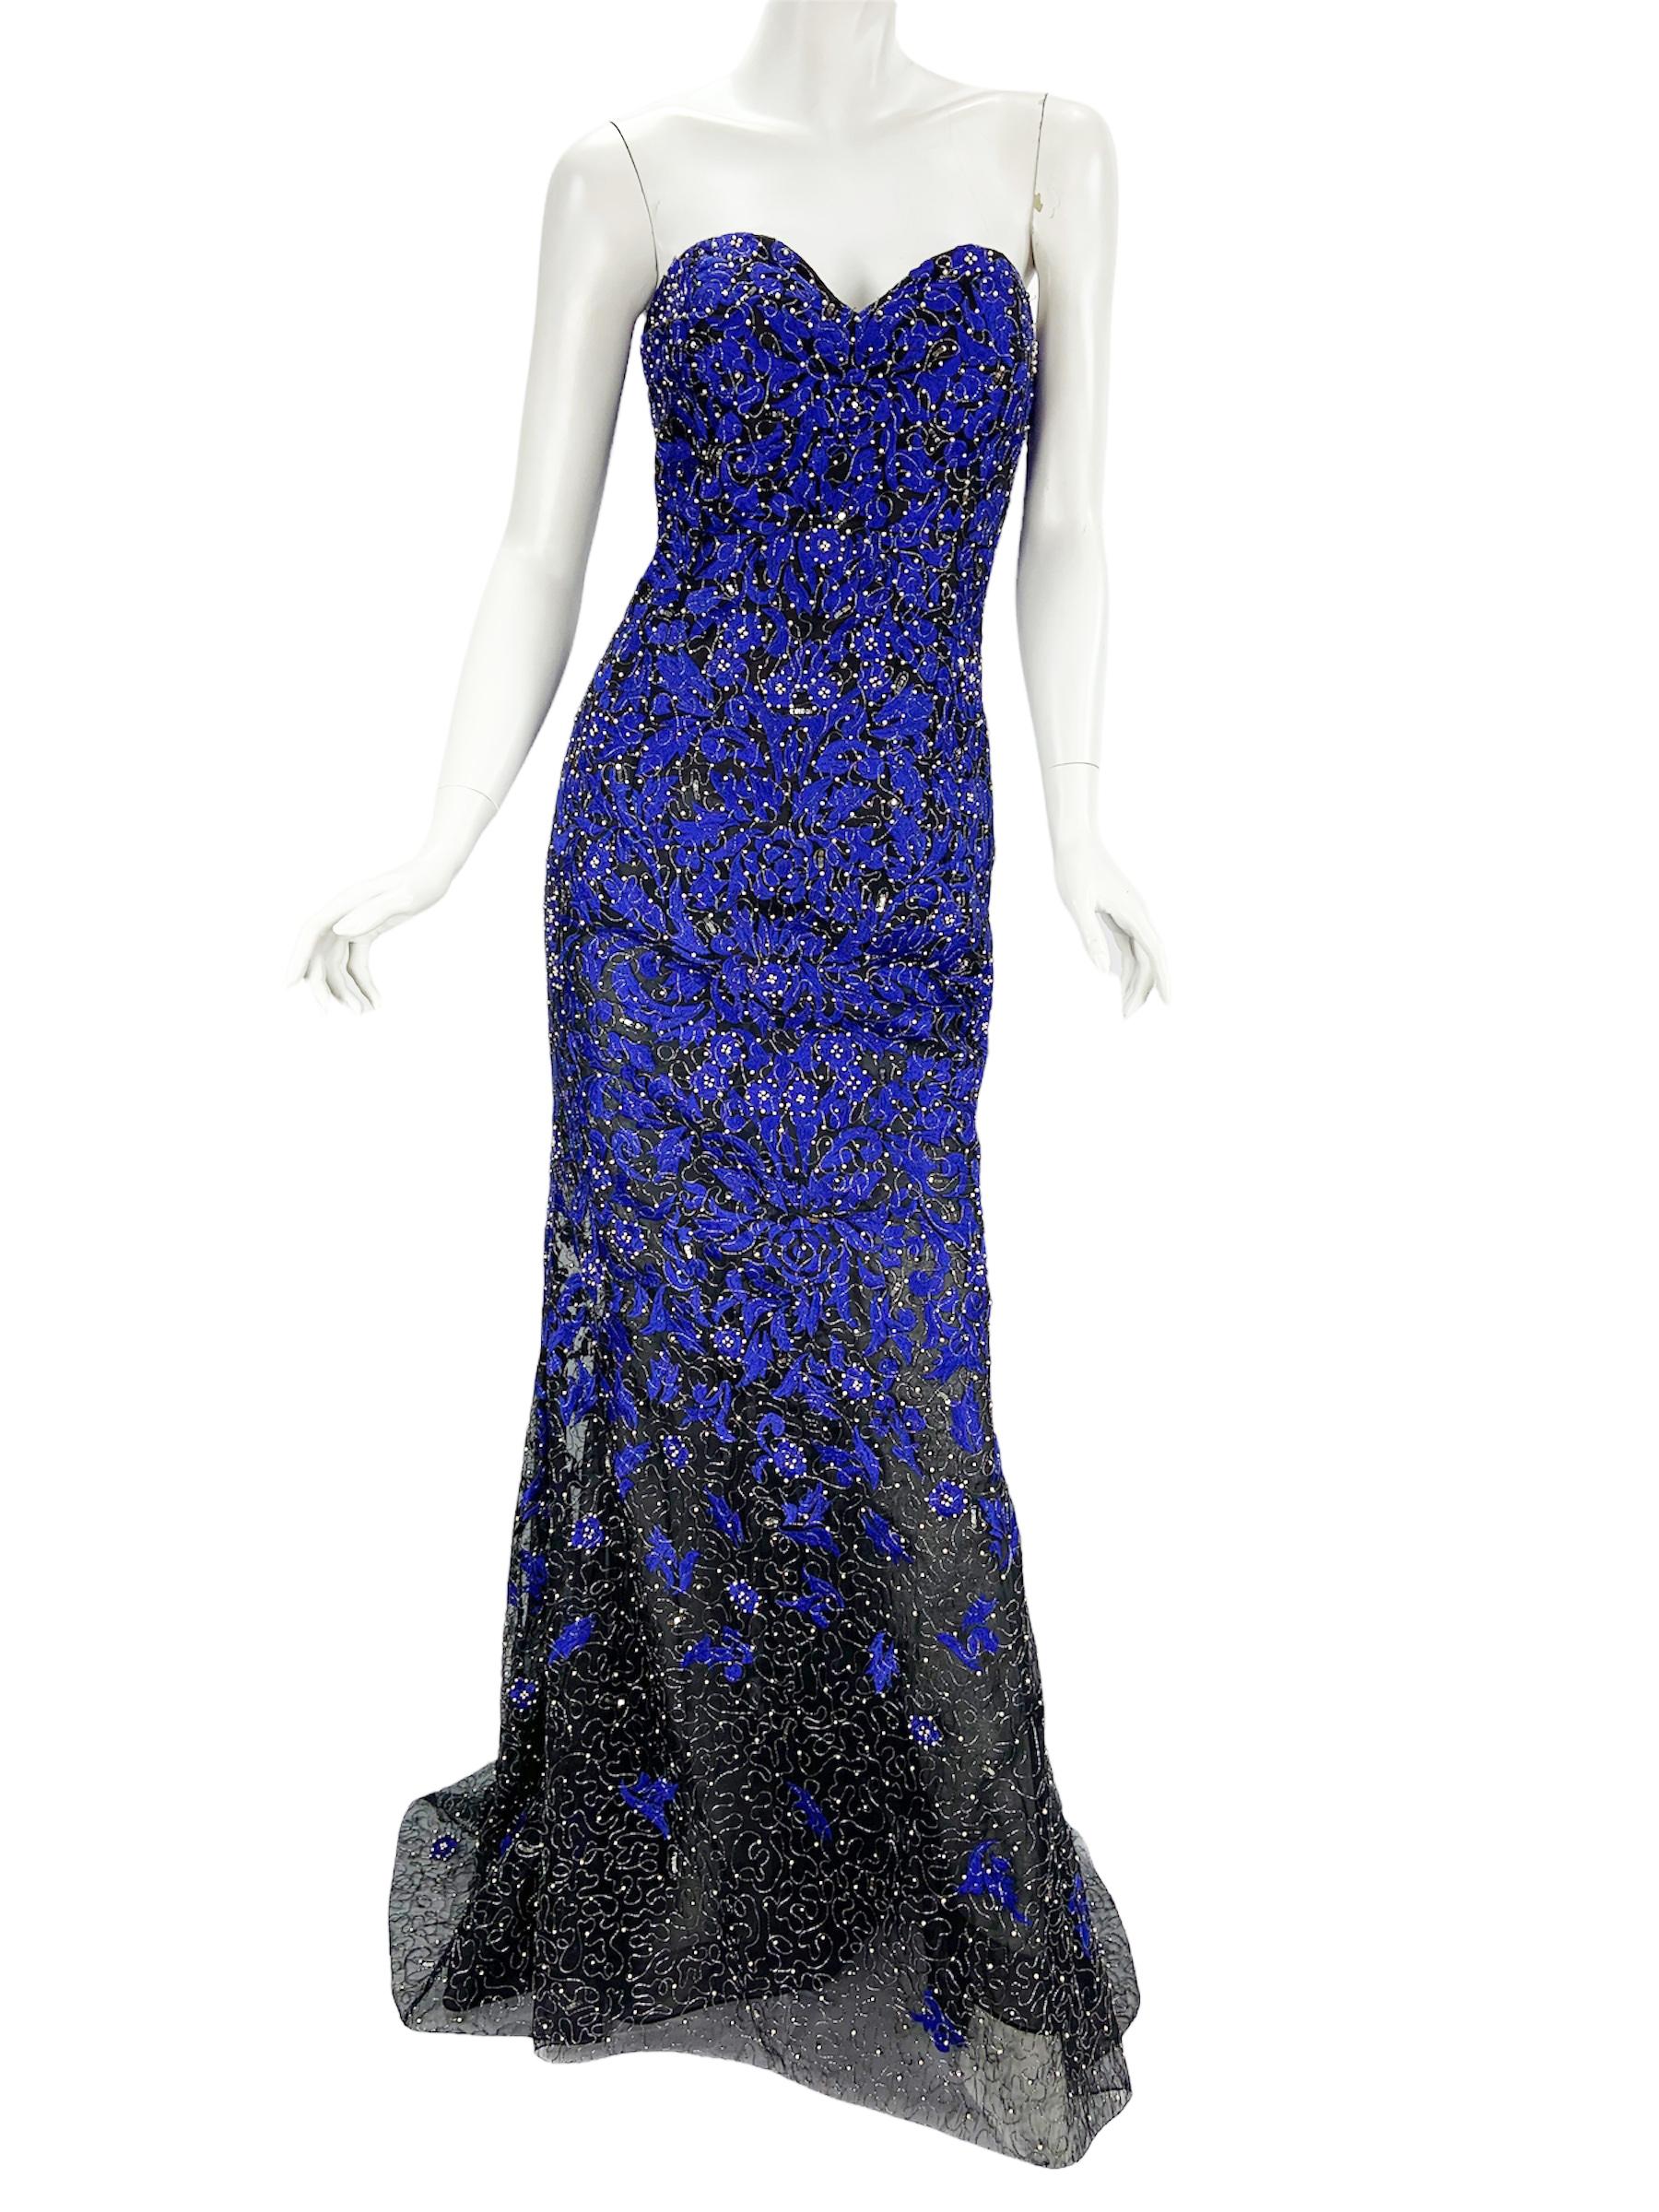 Purple Oscar De La Renta F/W 2014 Blue Black Embroidered Beaded Corset Dress Gown US 4 For Sale